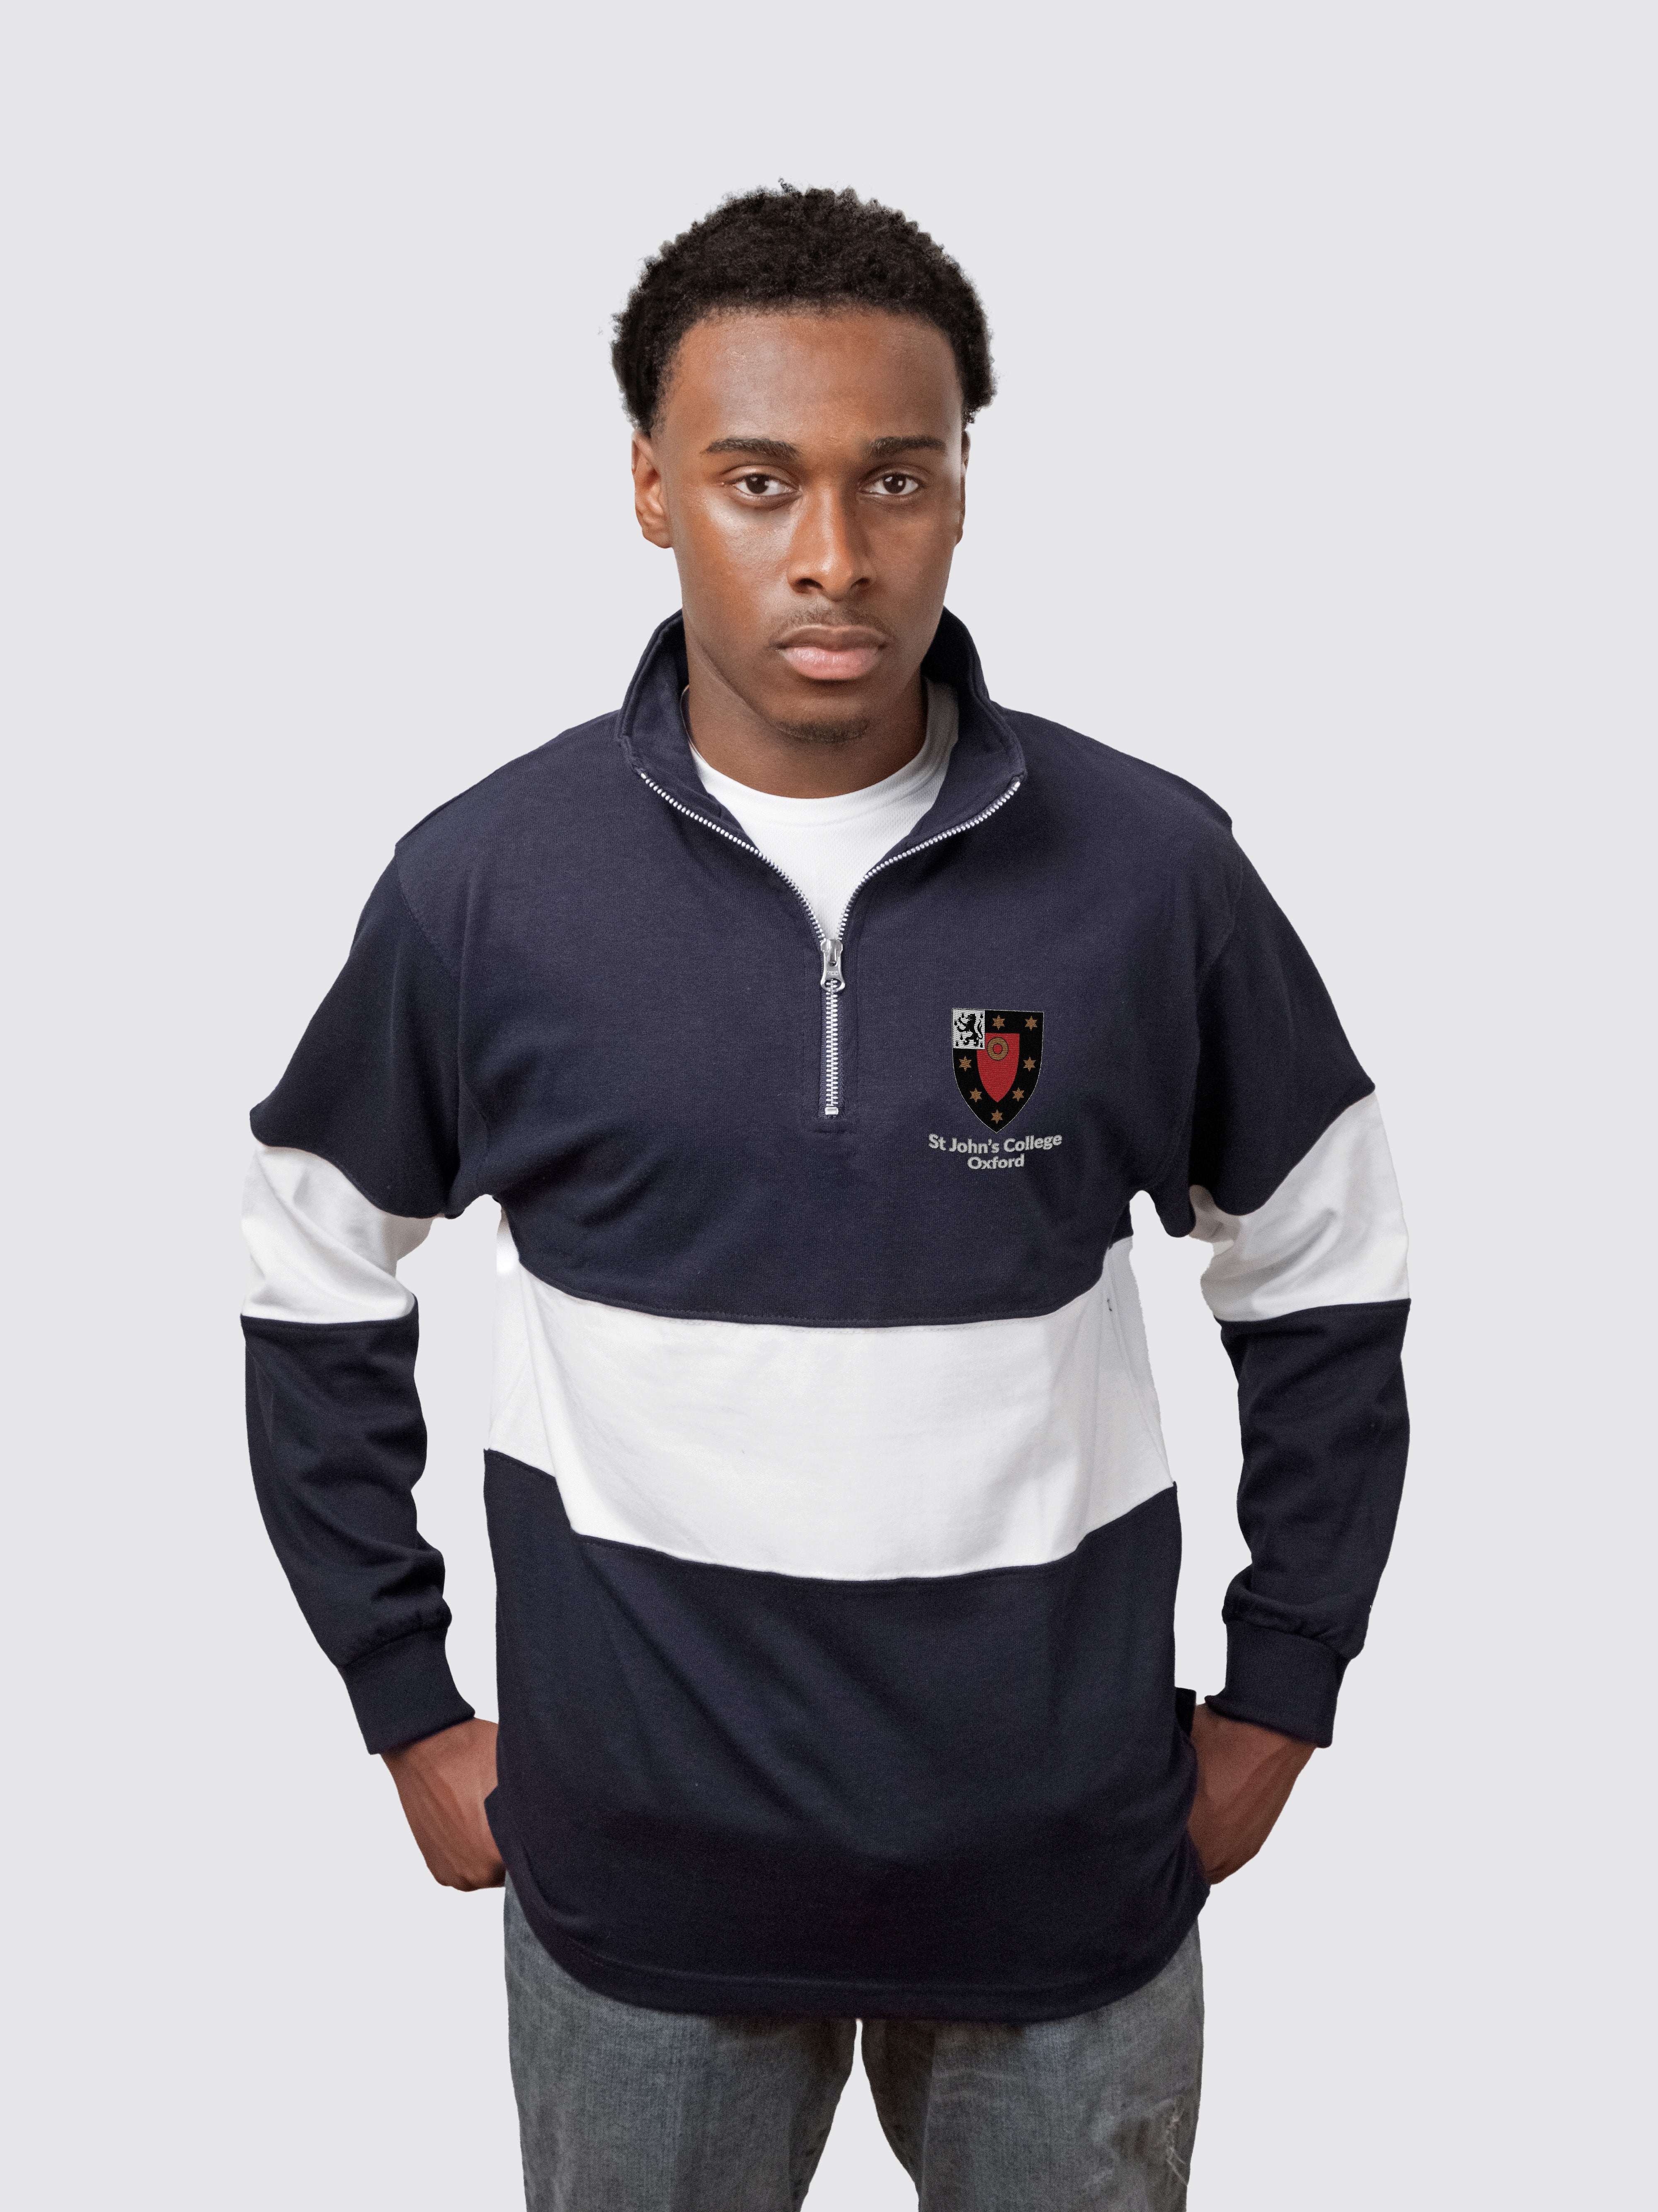 St John's College Oxford JCR Unisex Panelled 1/4 Zip Sweatshirt